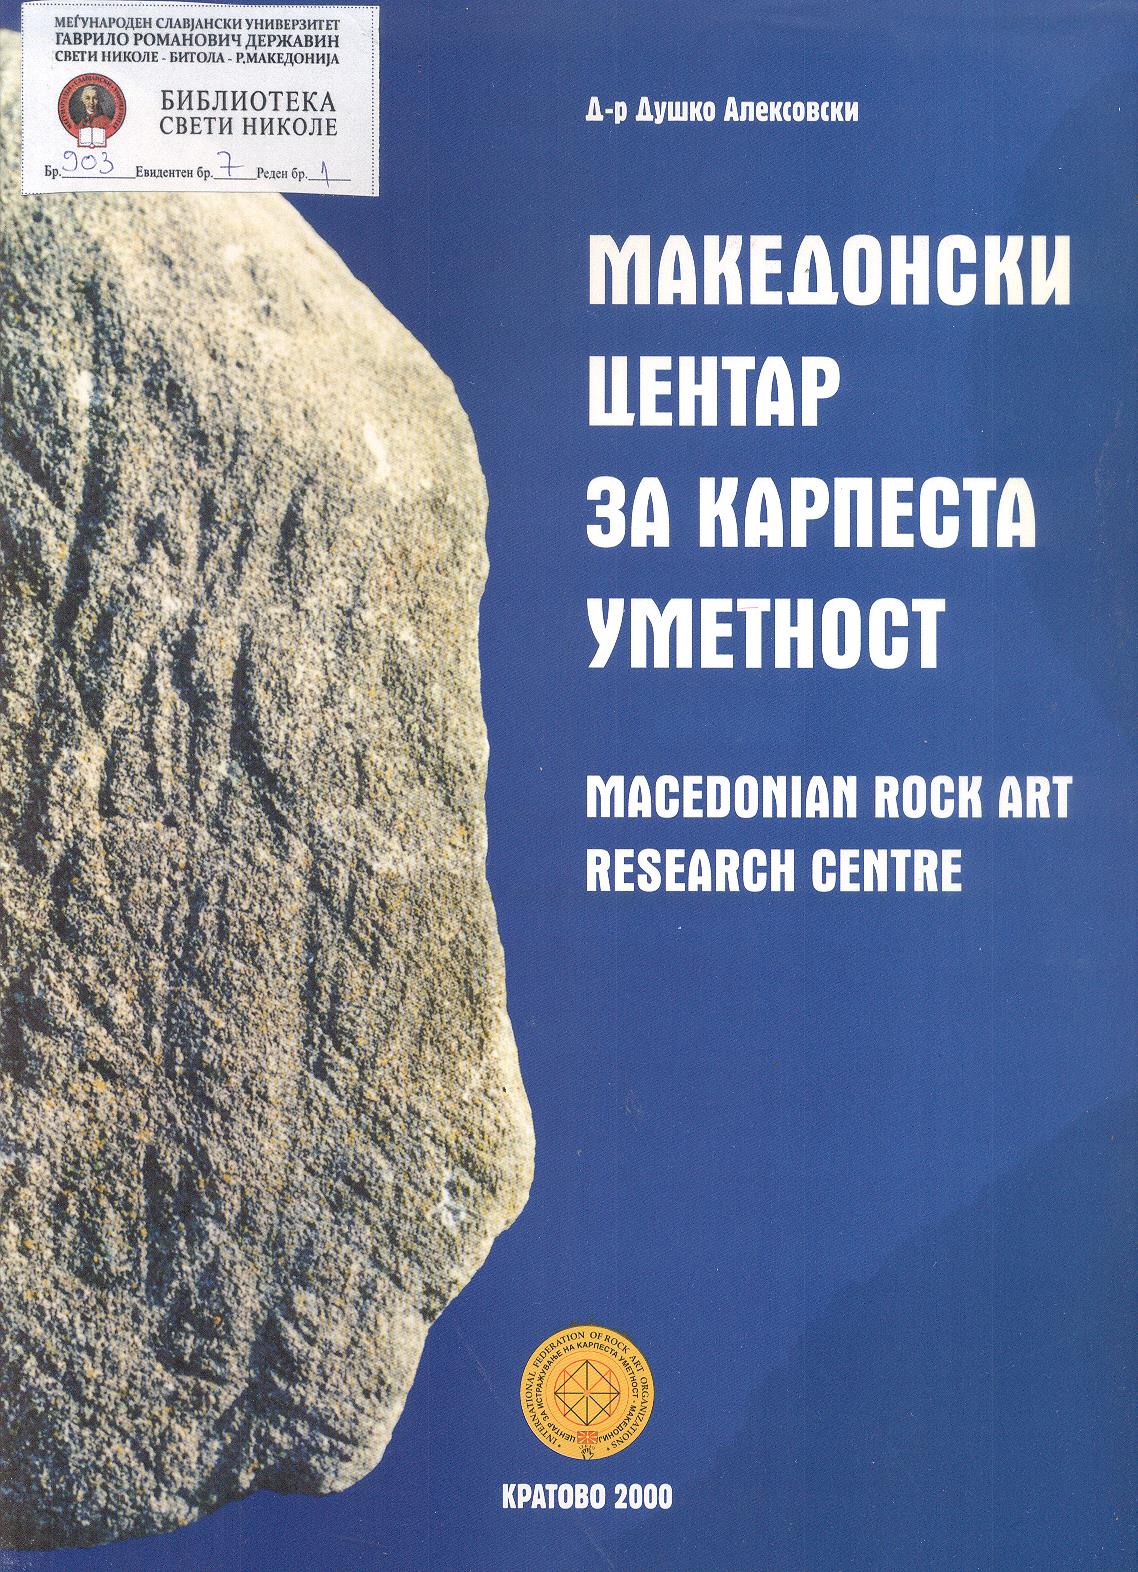 Македонски центар за карпеста уметност